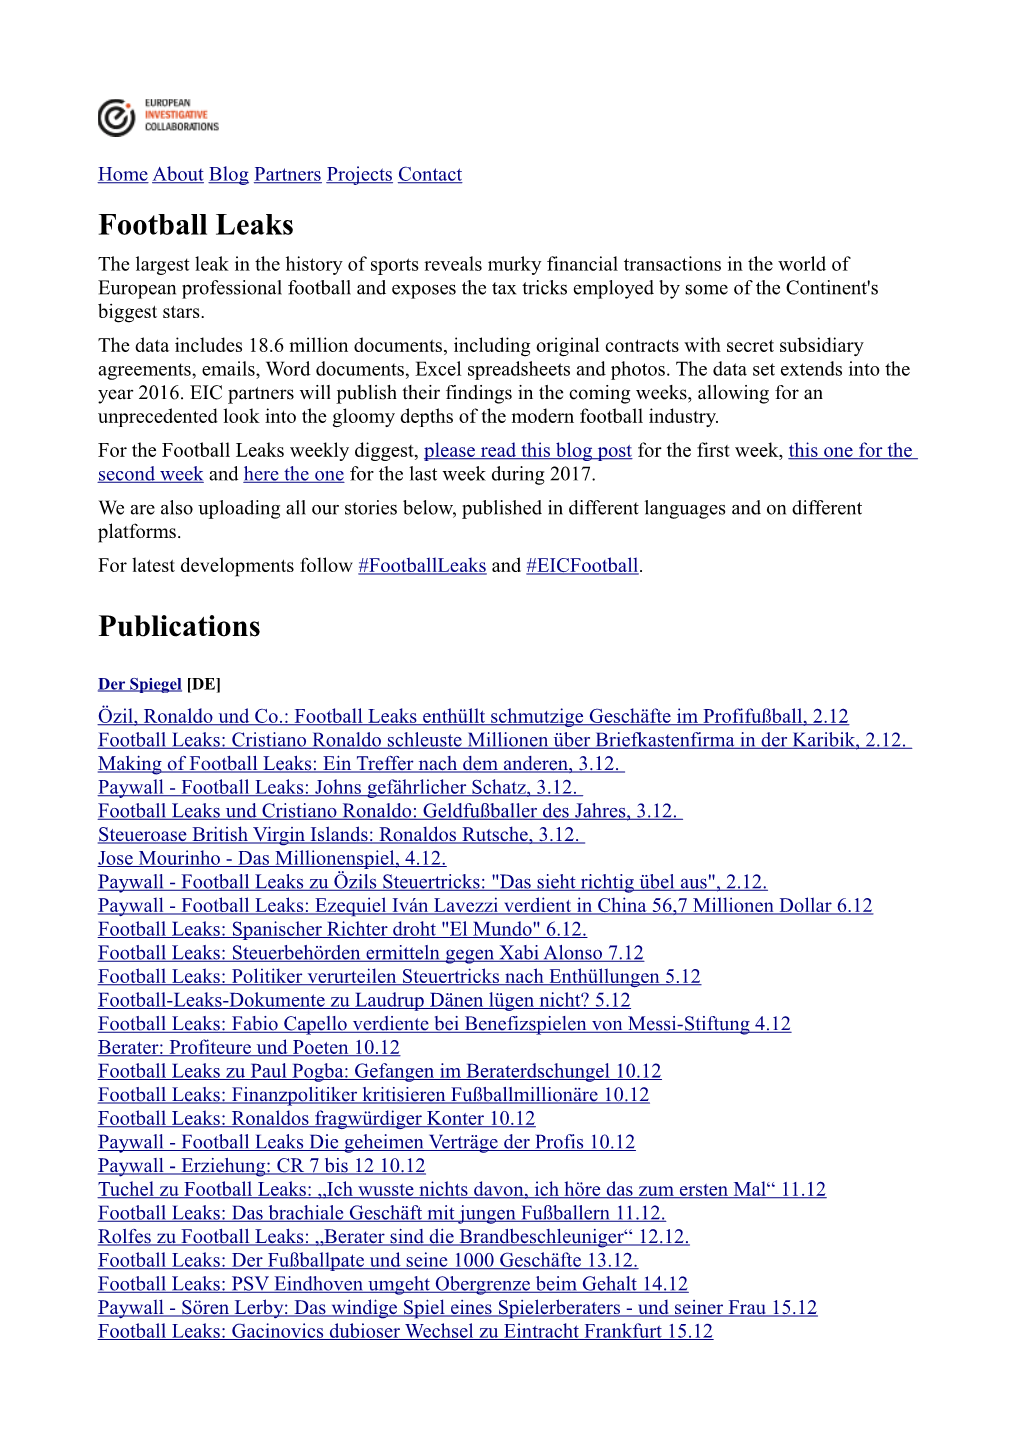 Football Leaks Publications